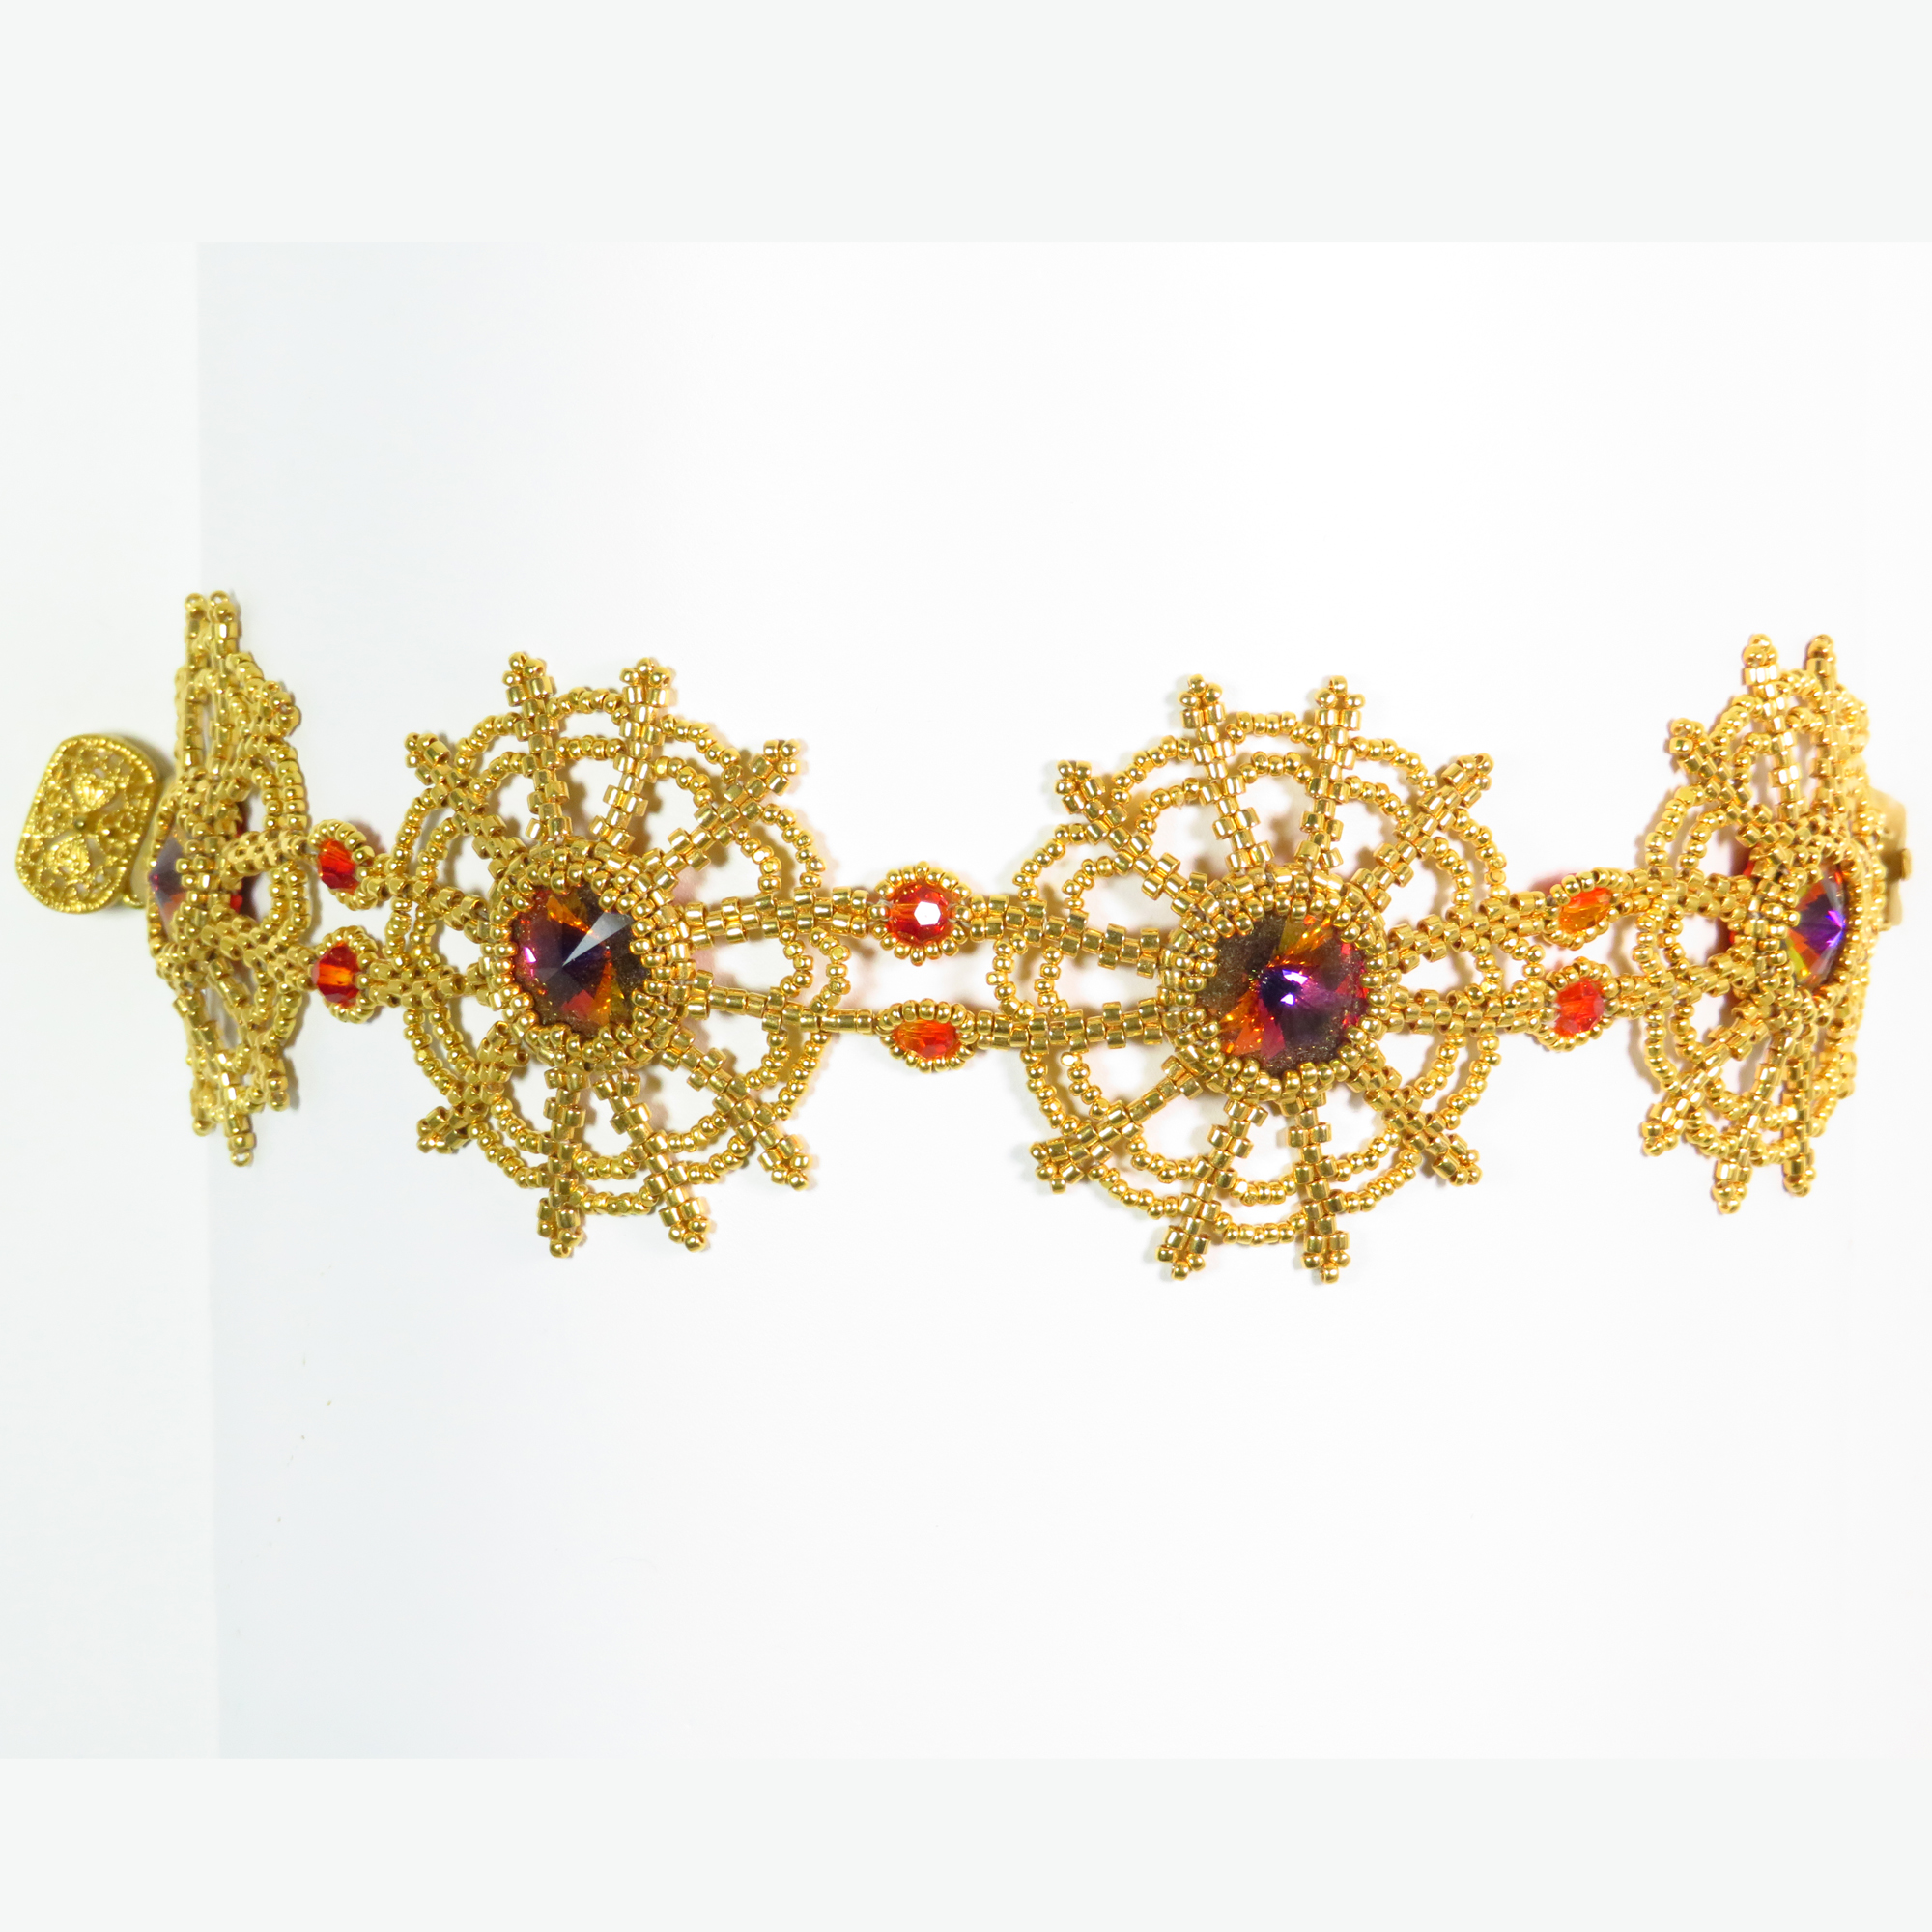 24K Gold radial spokes netting beaded bracelet by Bonnie Van Hall